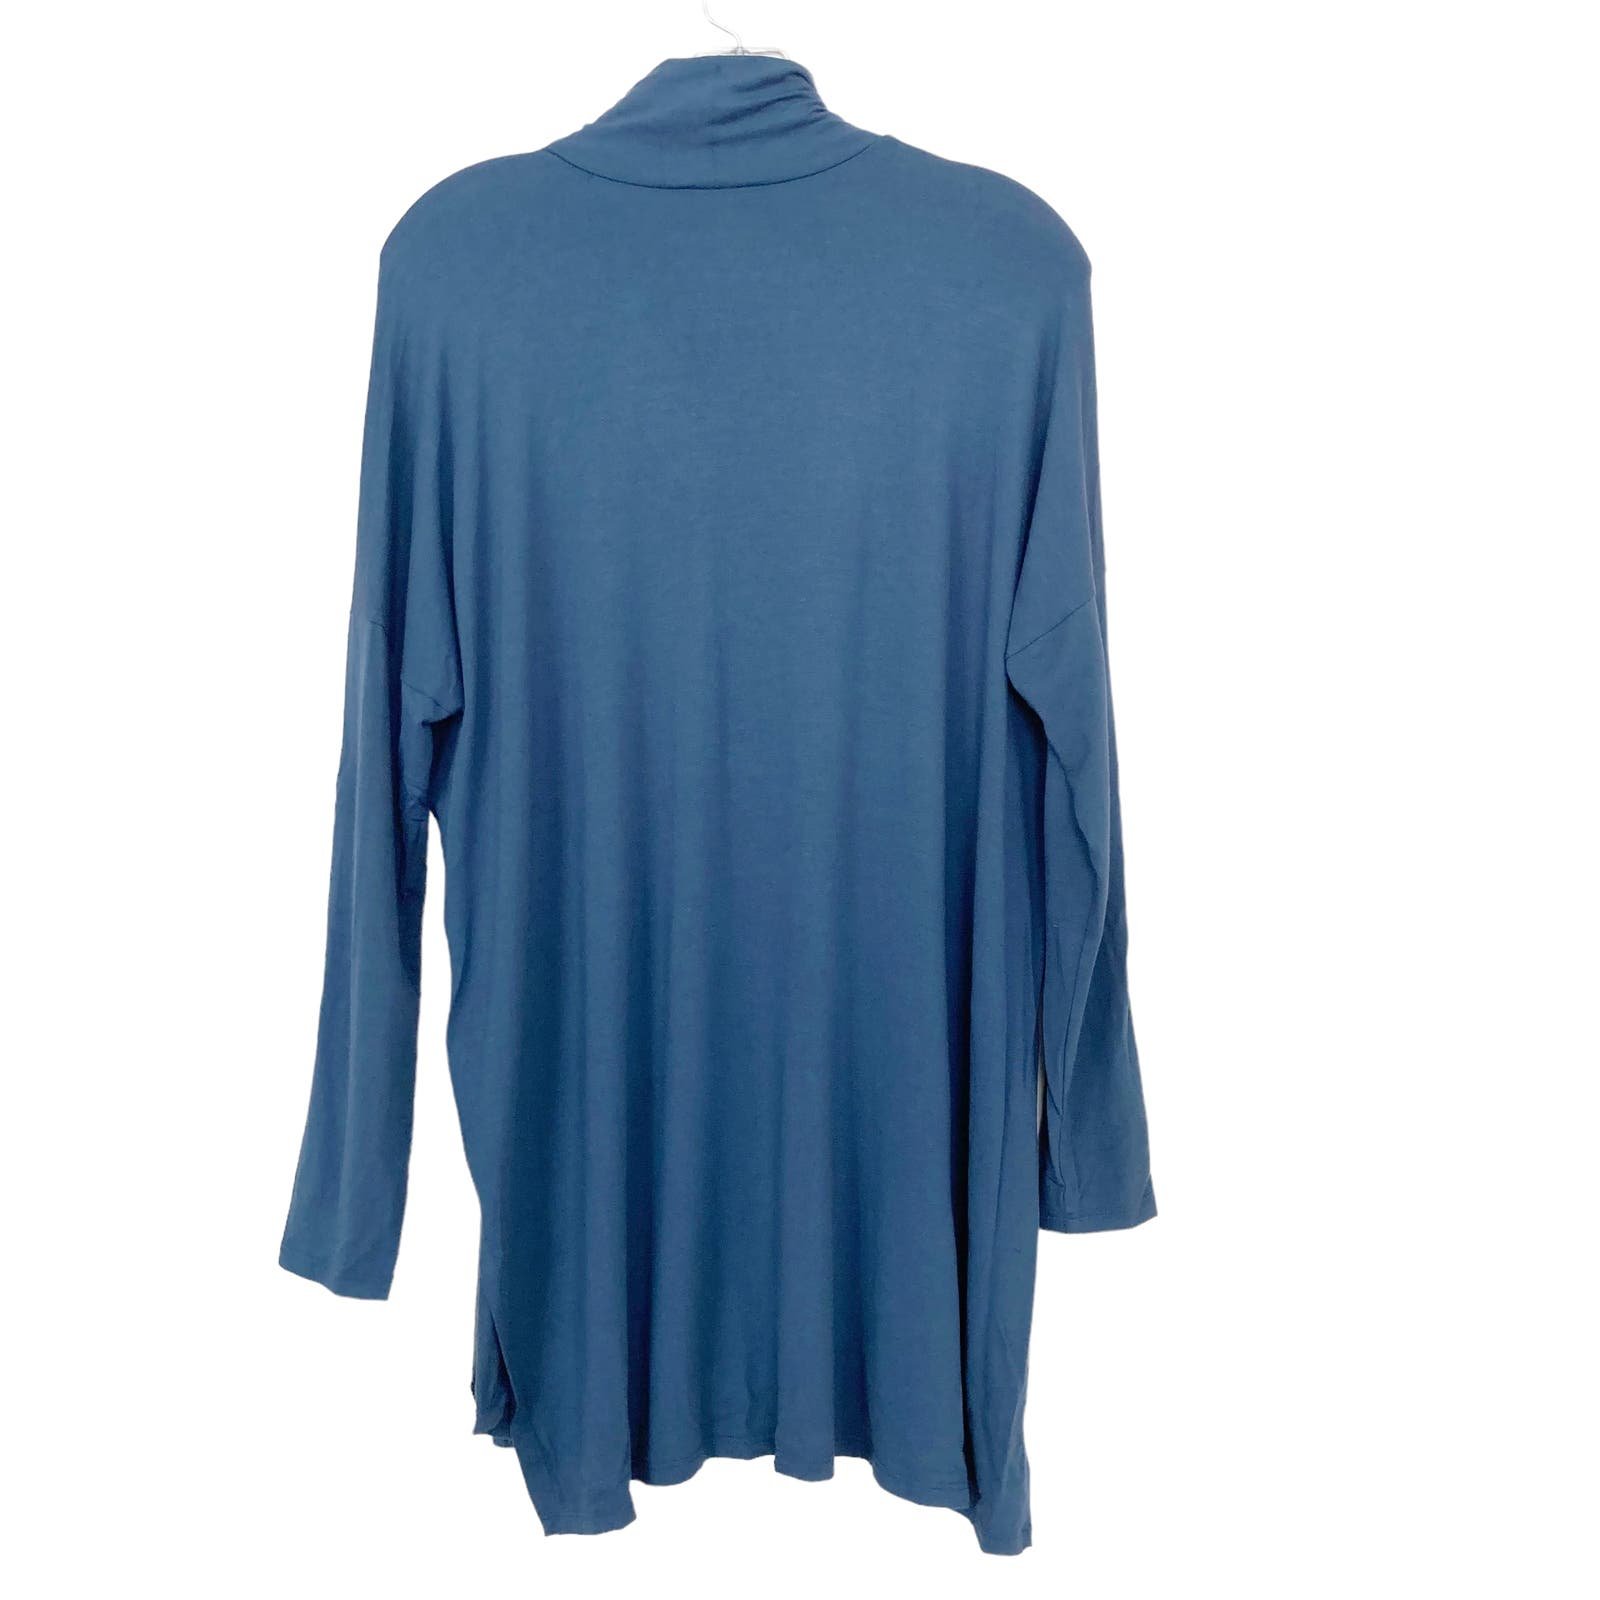 Popular Eileen Fisher Blue Long Sleeve Turtleneck Sz S pqjDC23MU New Style